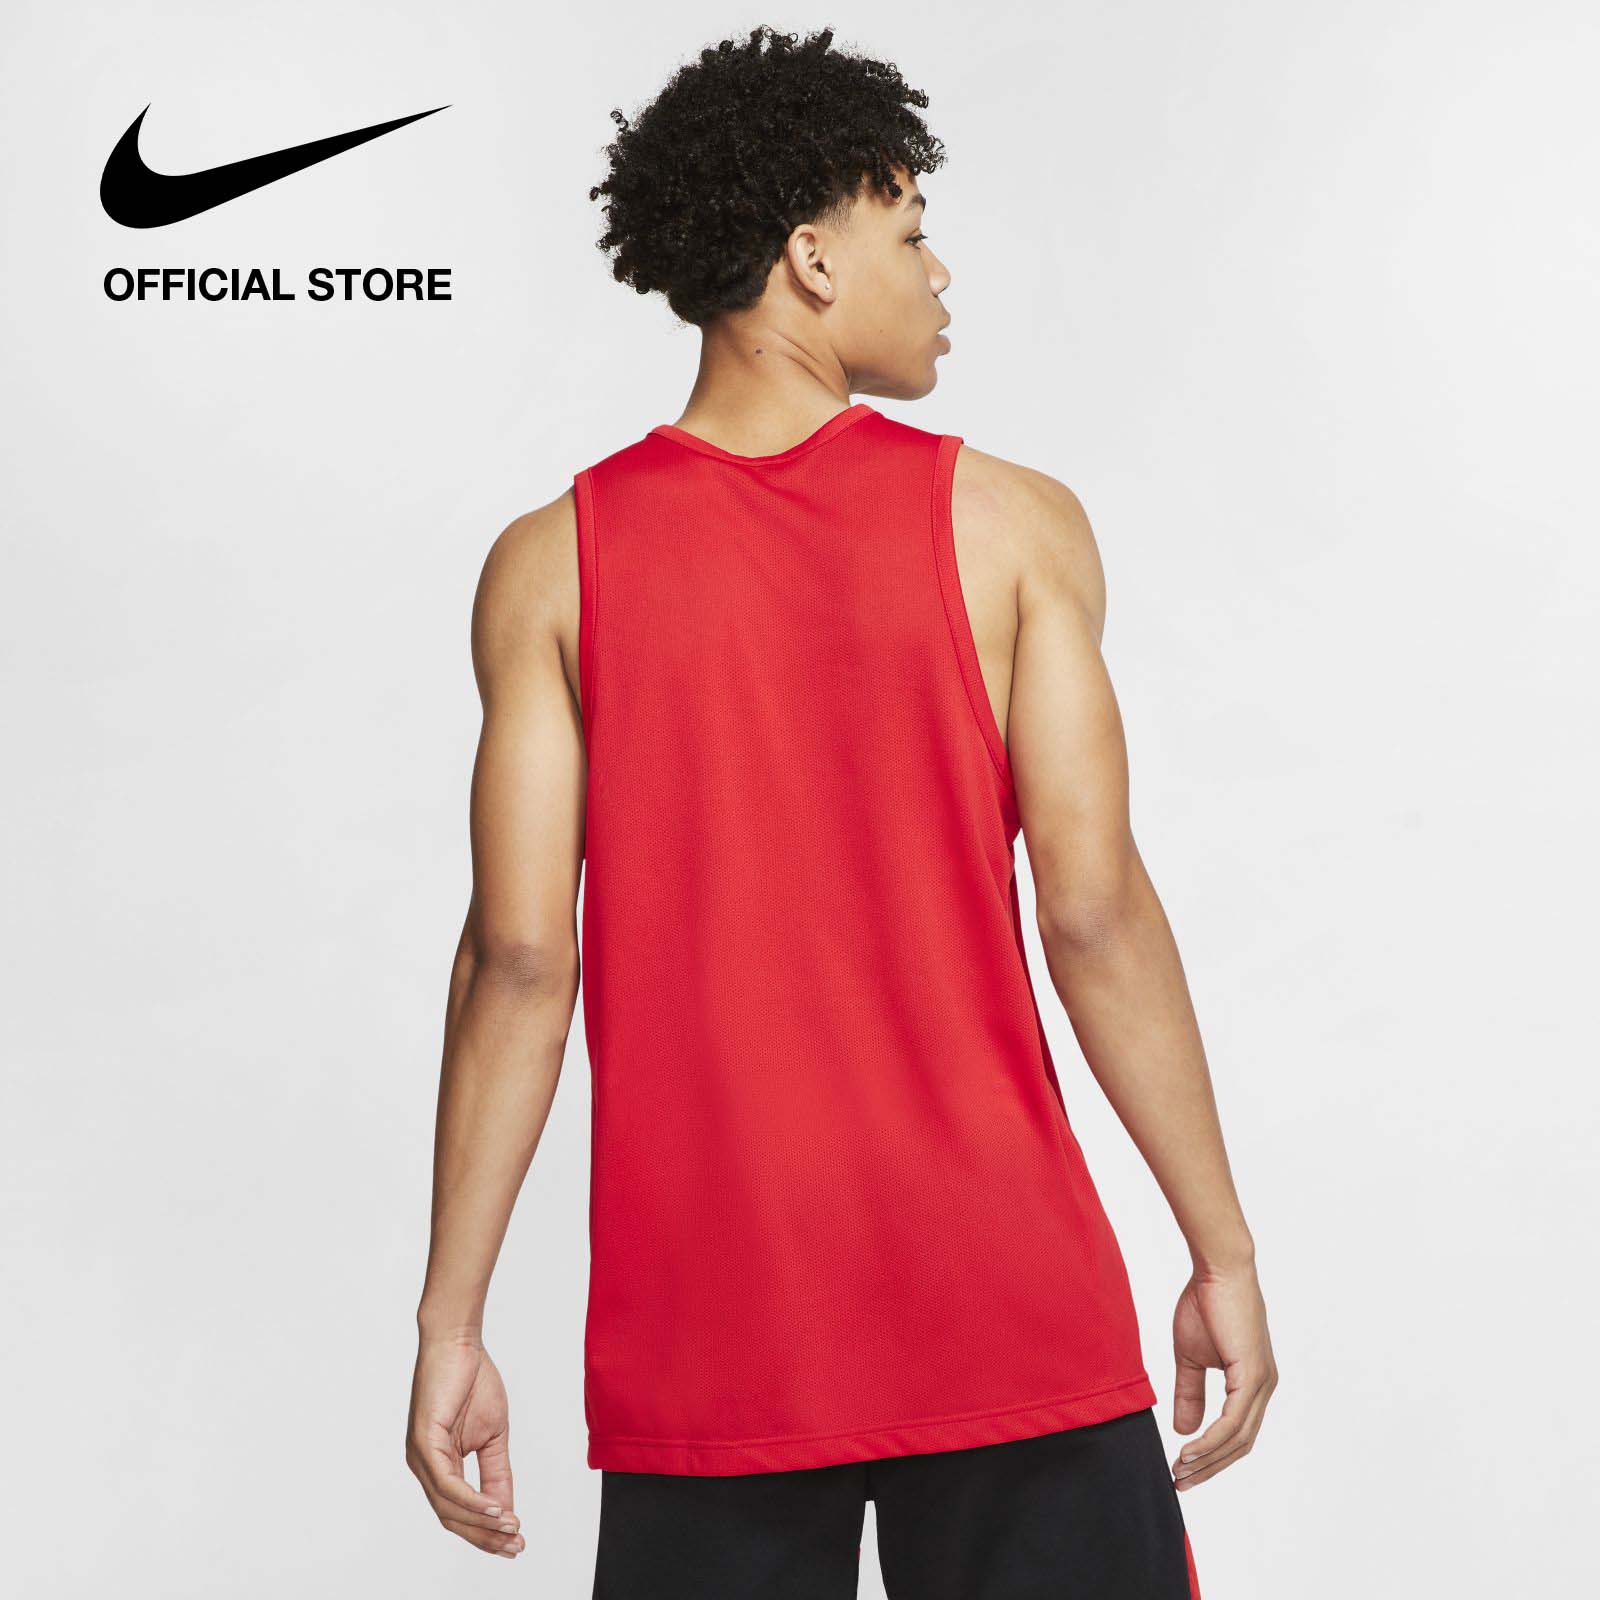 Nike Men's Dri-FIT Basketball Top - University Red ไนกี้ เสื้อบาสเก็ตบอลผู้ชาย ดรายฟิต - สีแดง